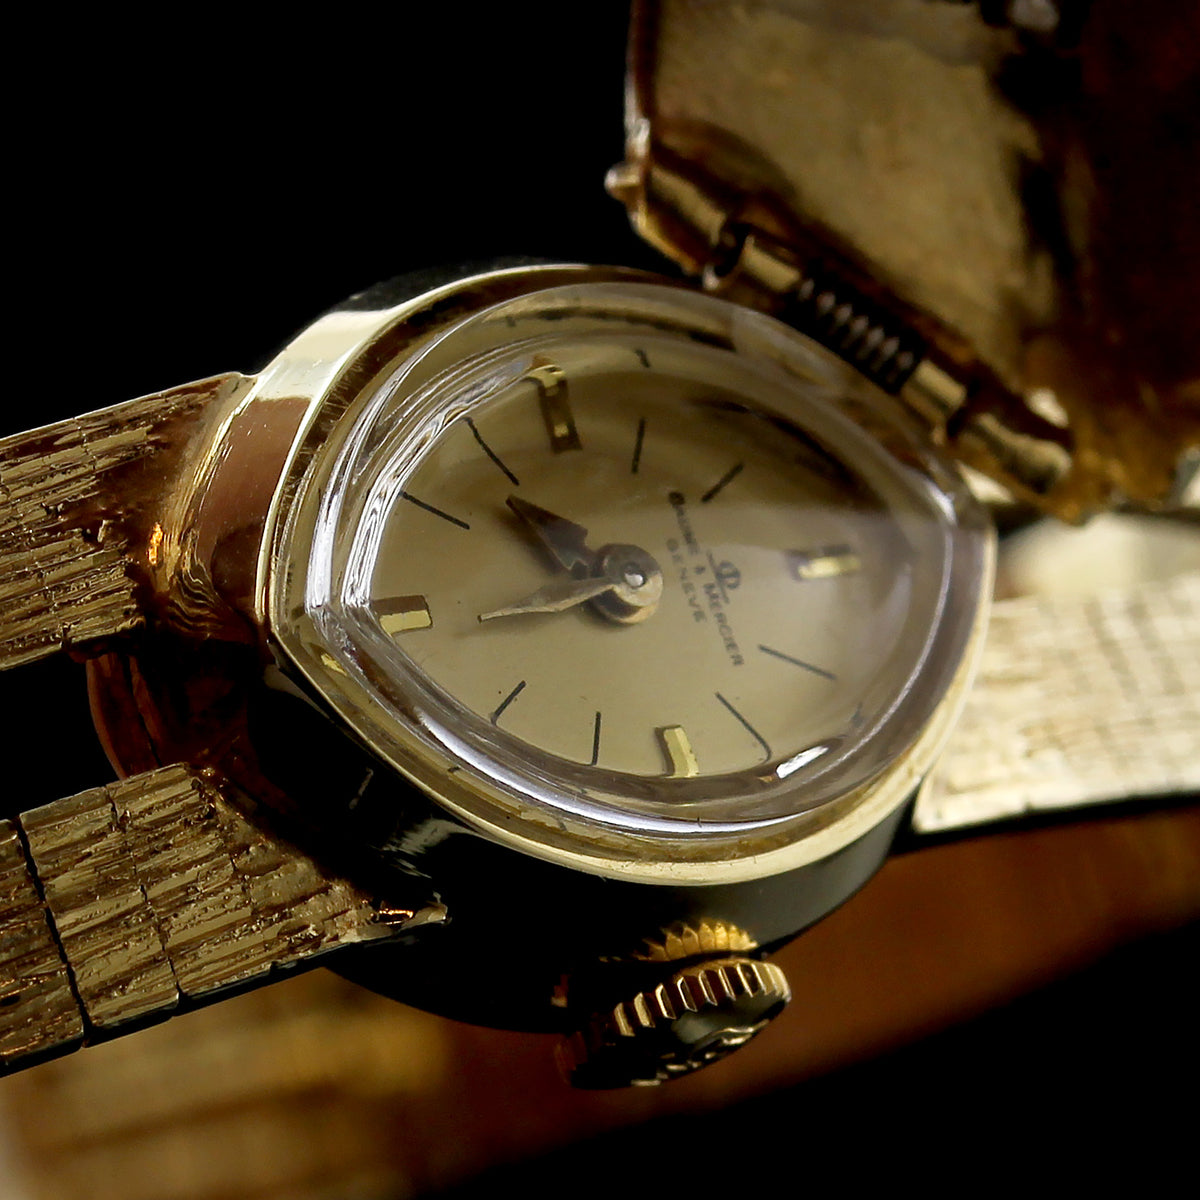 Baume & Mercier 14K Yellow Gold Estate Diamond Covered Wristwatch